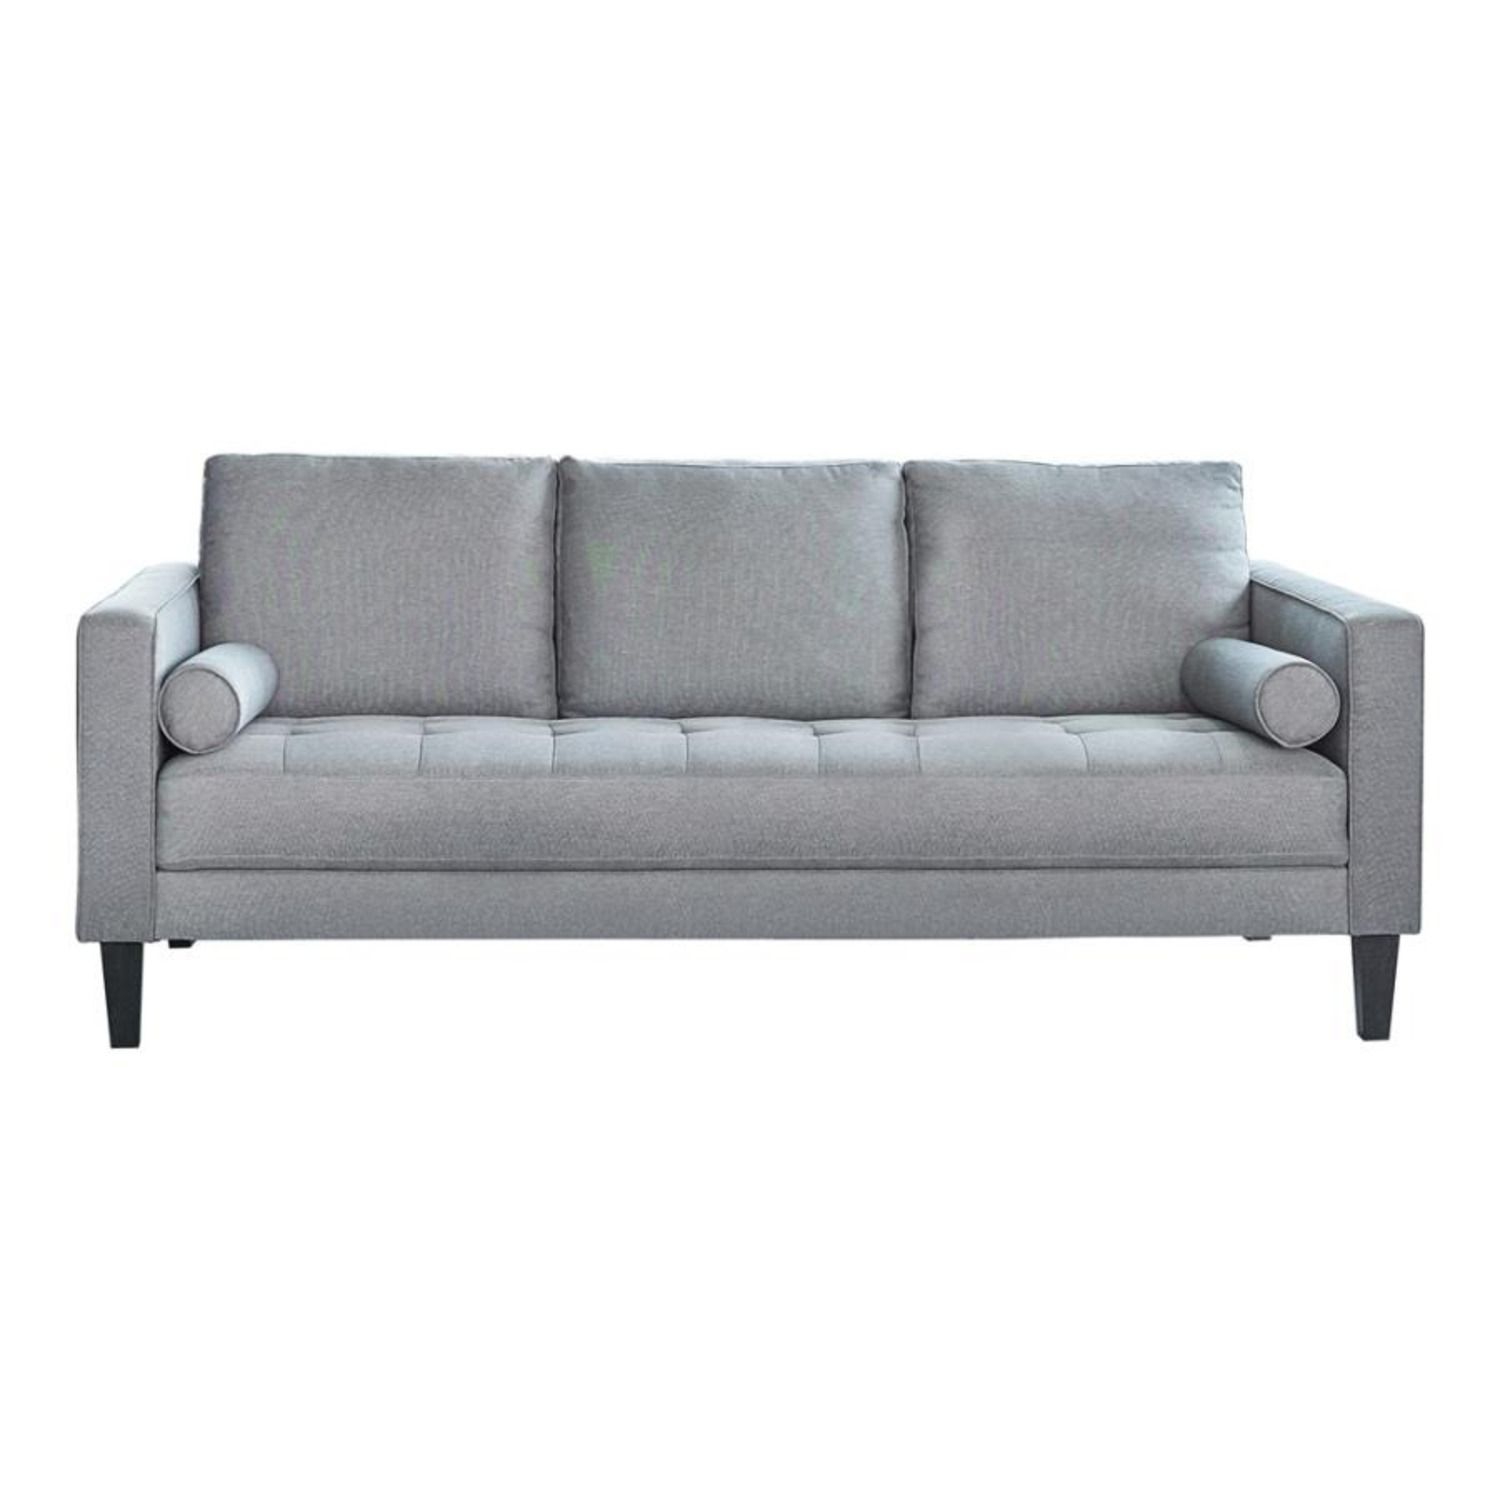 Modern Sofa In Linen Like Charcoal Upholstery – Aptdeco In Light Charcoal Linen Sofas (View 11 of 20)